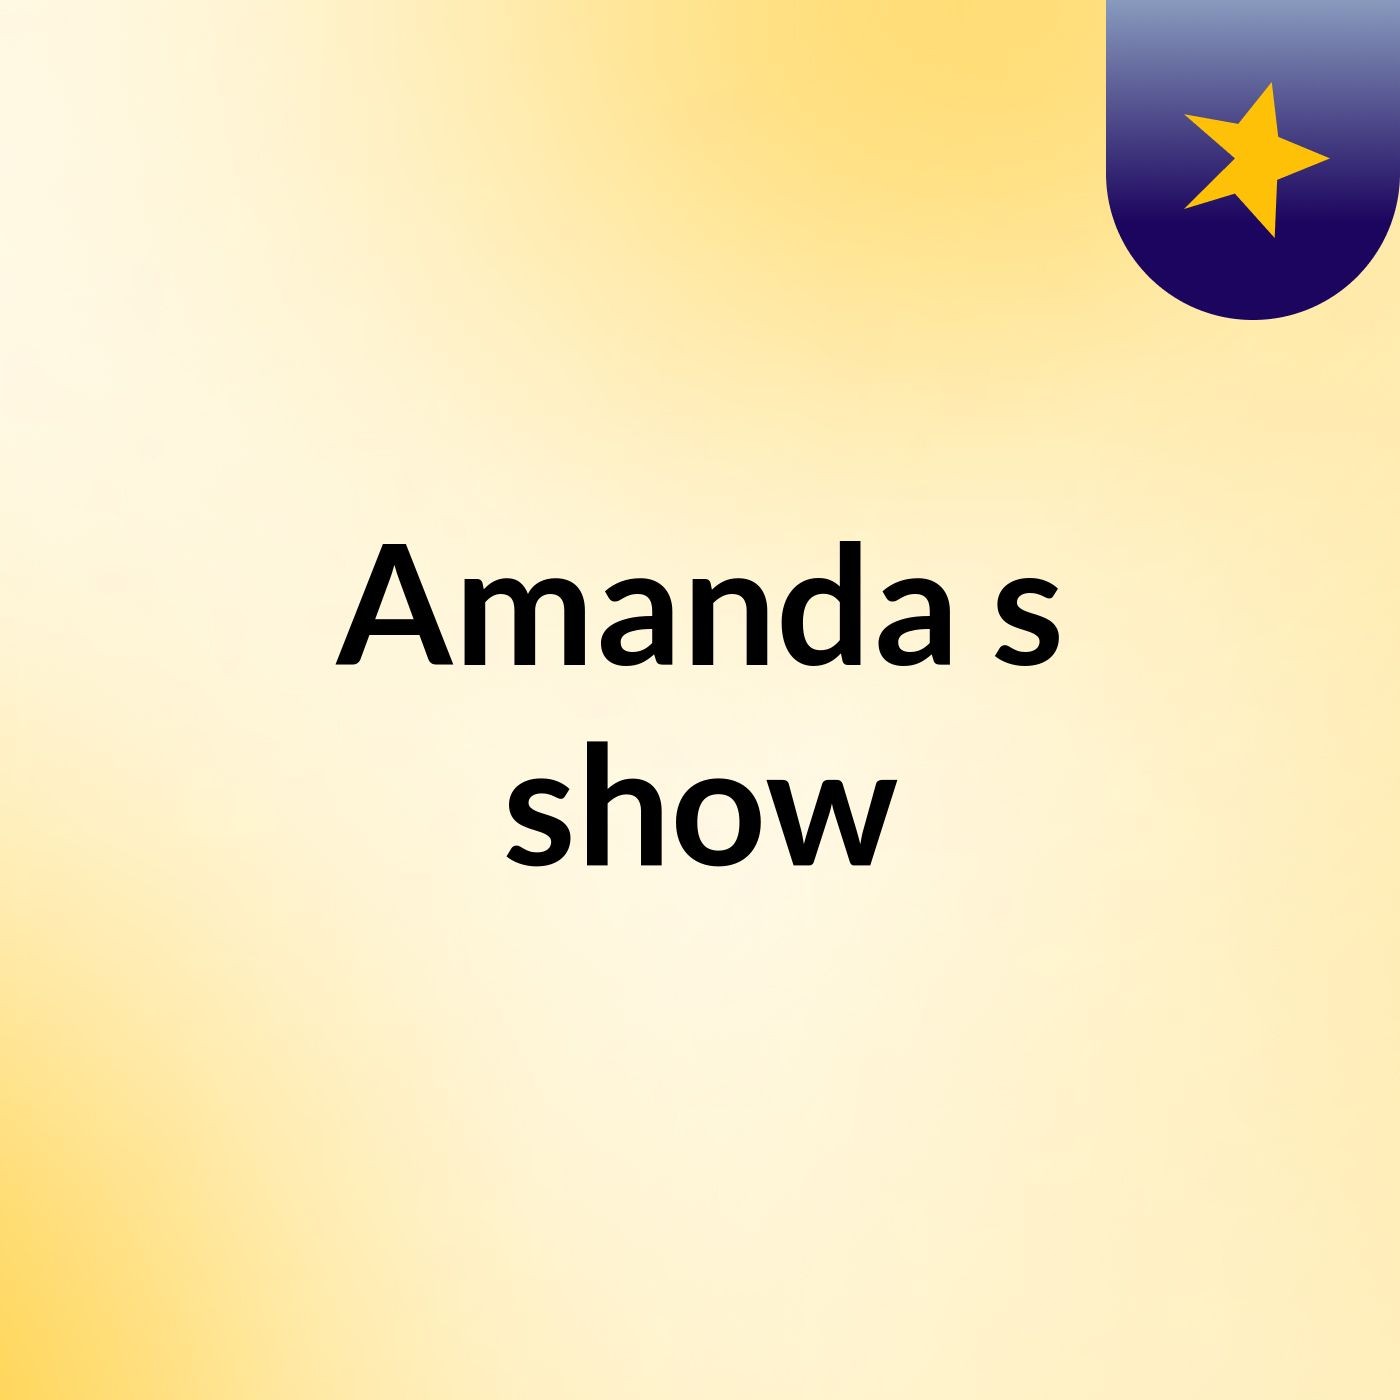 Amanda's show